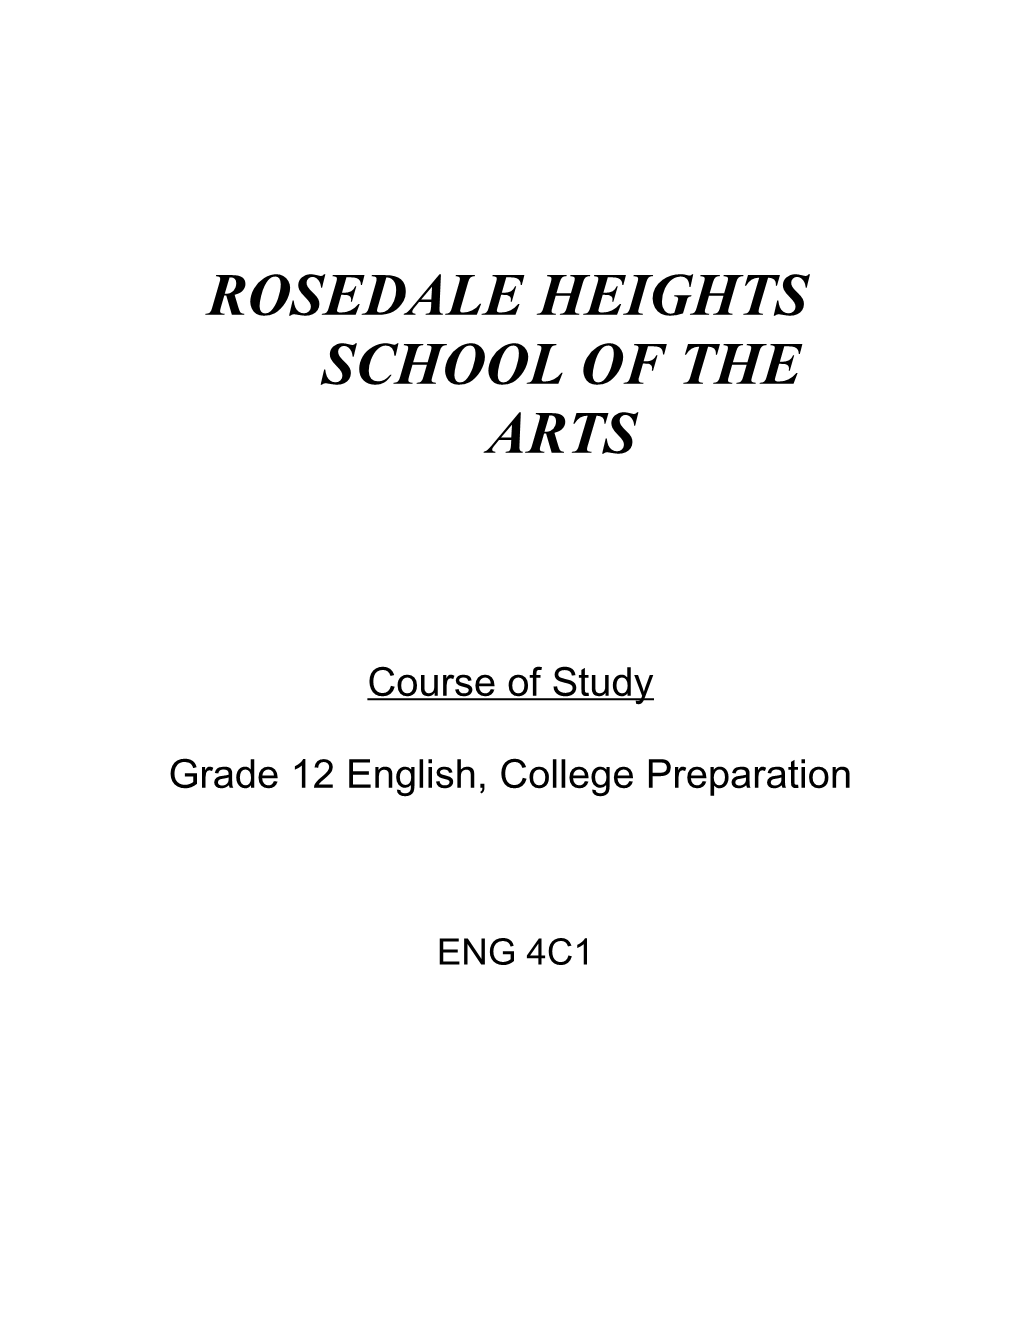 Rosedale Heights School of the Arts